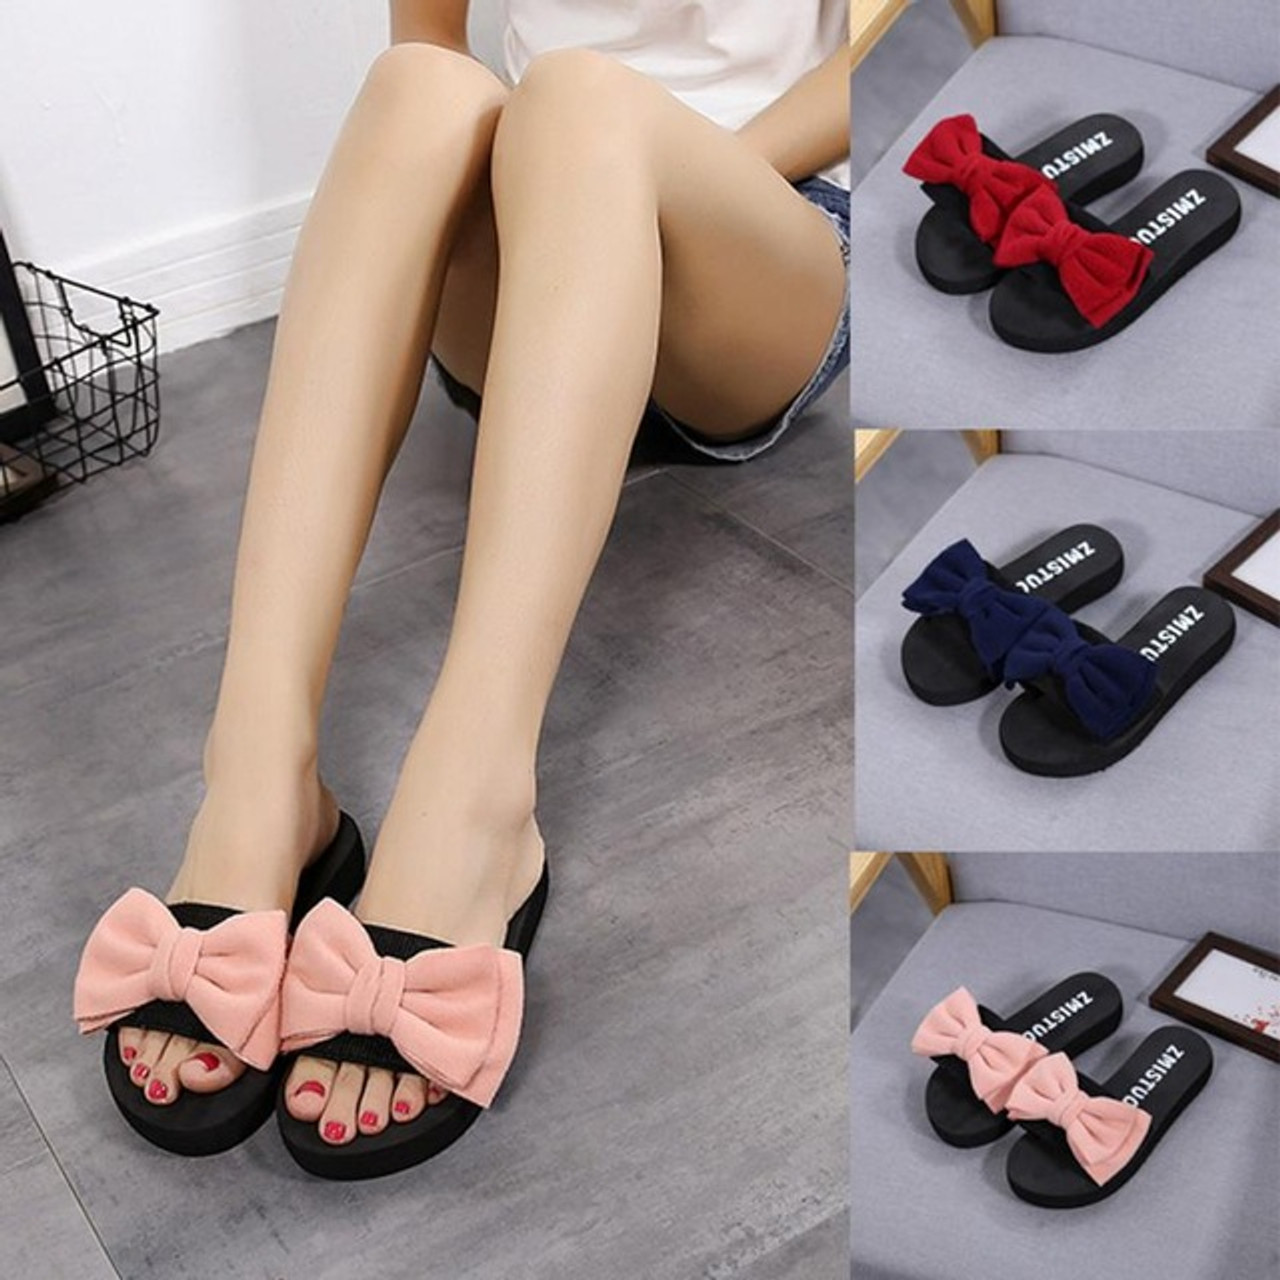 https://cdn11.bigcommerce.com/s-mdw6x585bm/images/stencil/1280x1280/products/2011/8817/Hot-Sale-Women-Flip-Flop-Bow-Summer-Sandals-Slipper-Size-36-40-Indoor-Outdoor-Flip-flops.jpg_640x640__08844.1599674820.jpg?c=1